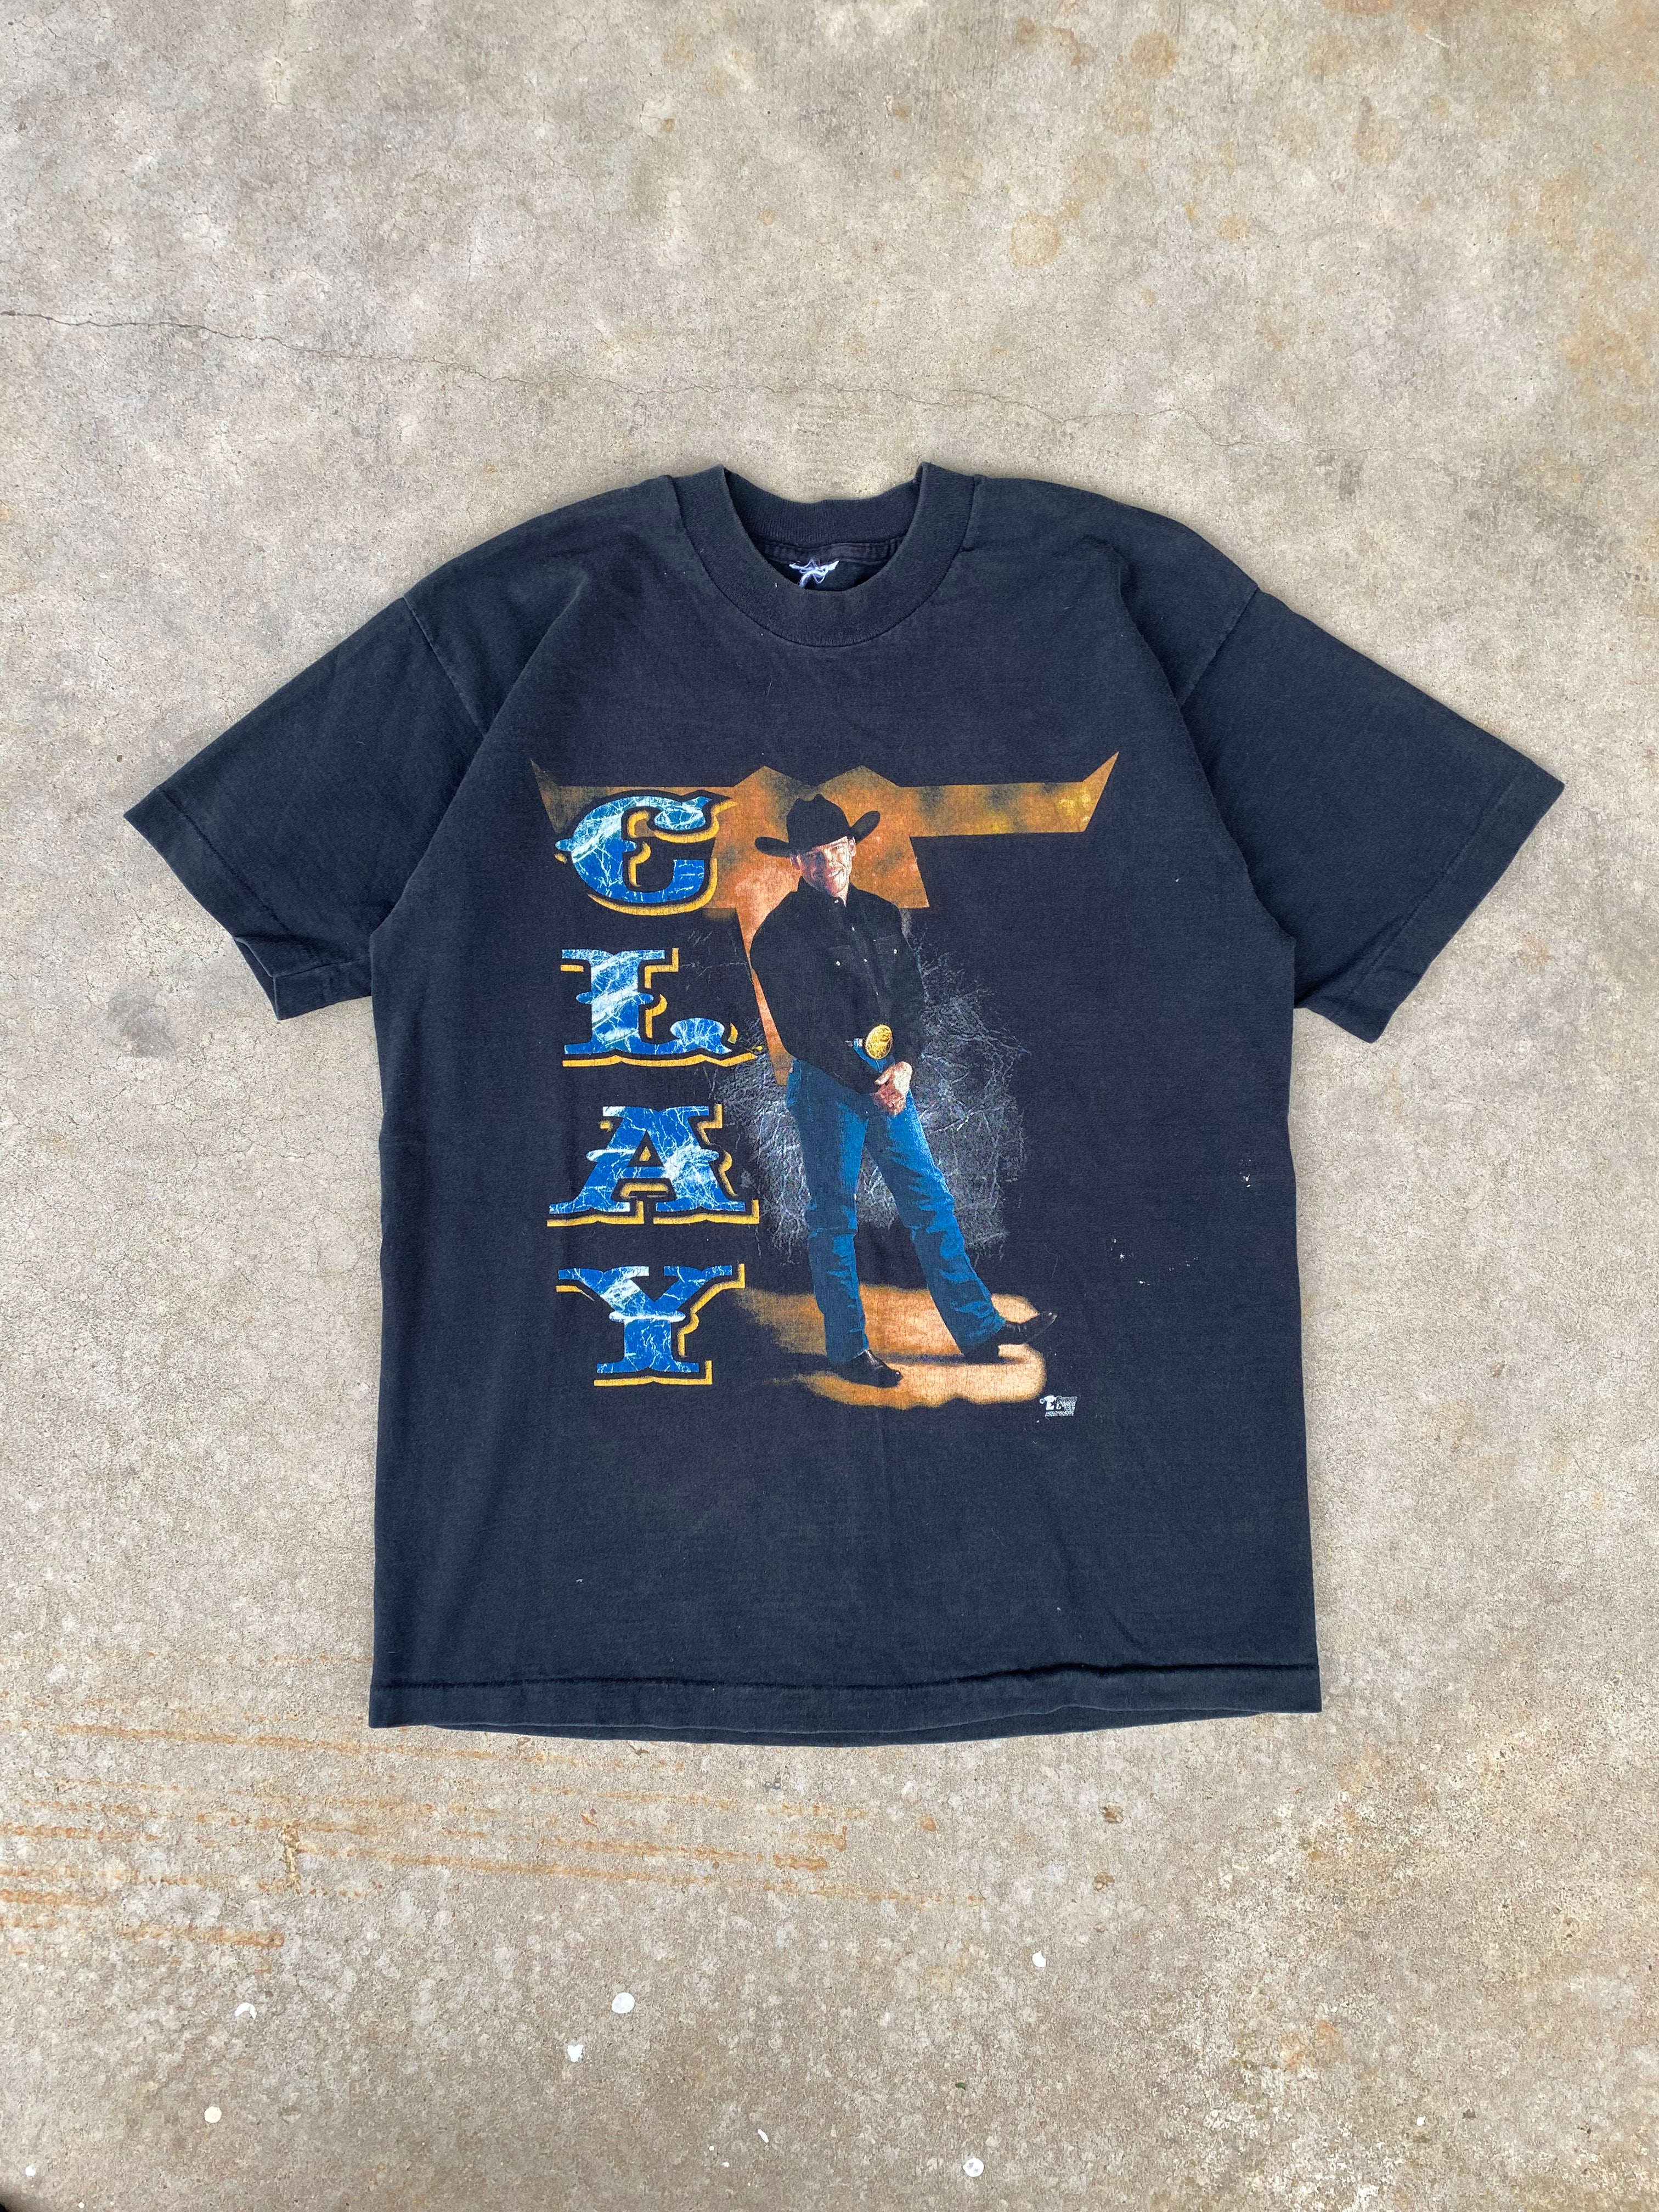 1997 Clay Walker Four Star Blowout Tour T-Shirt (M)